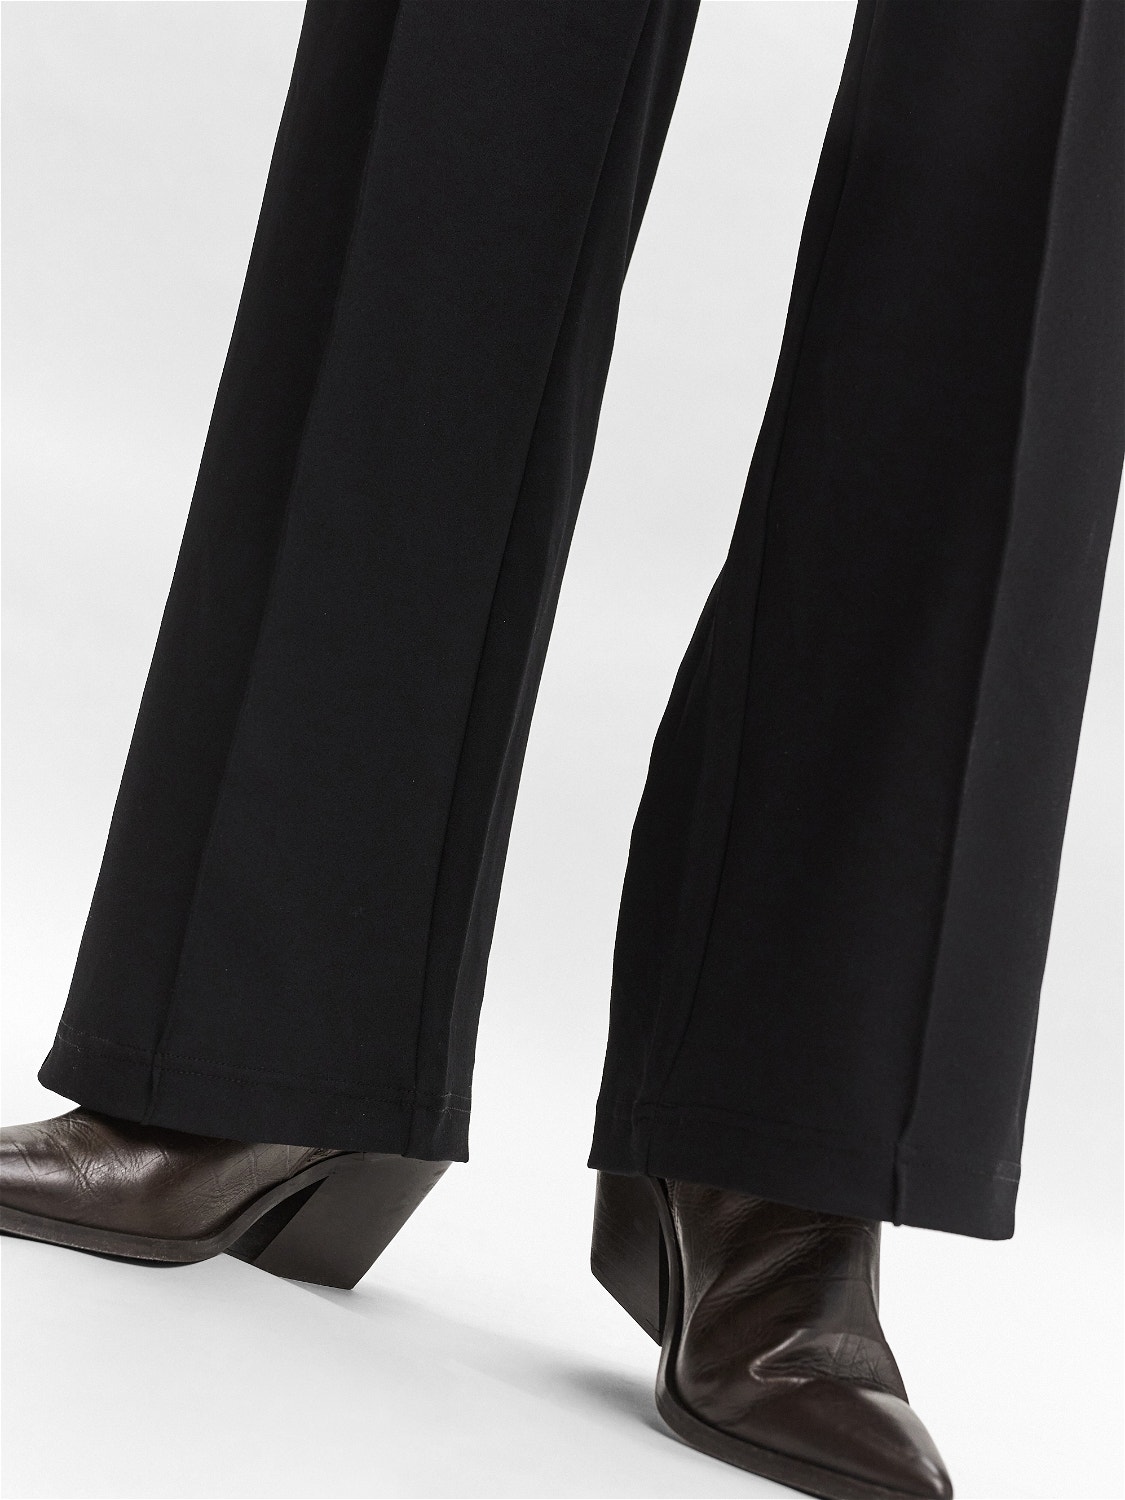 Vero Moda Pantalon large - Vmbecky Hw Wide Pull On Pant Noos (Noir) -  Vêtements chez Sarenza (703940)